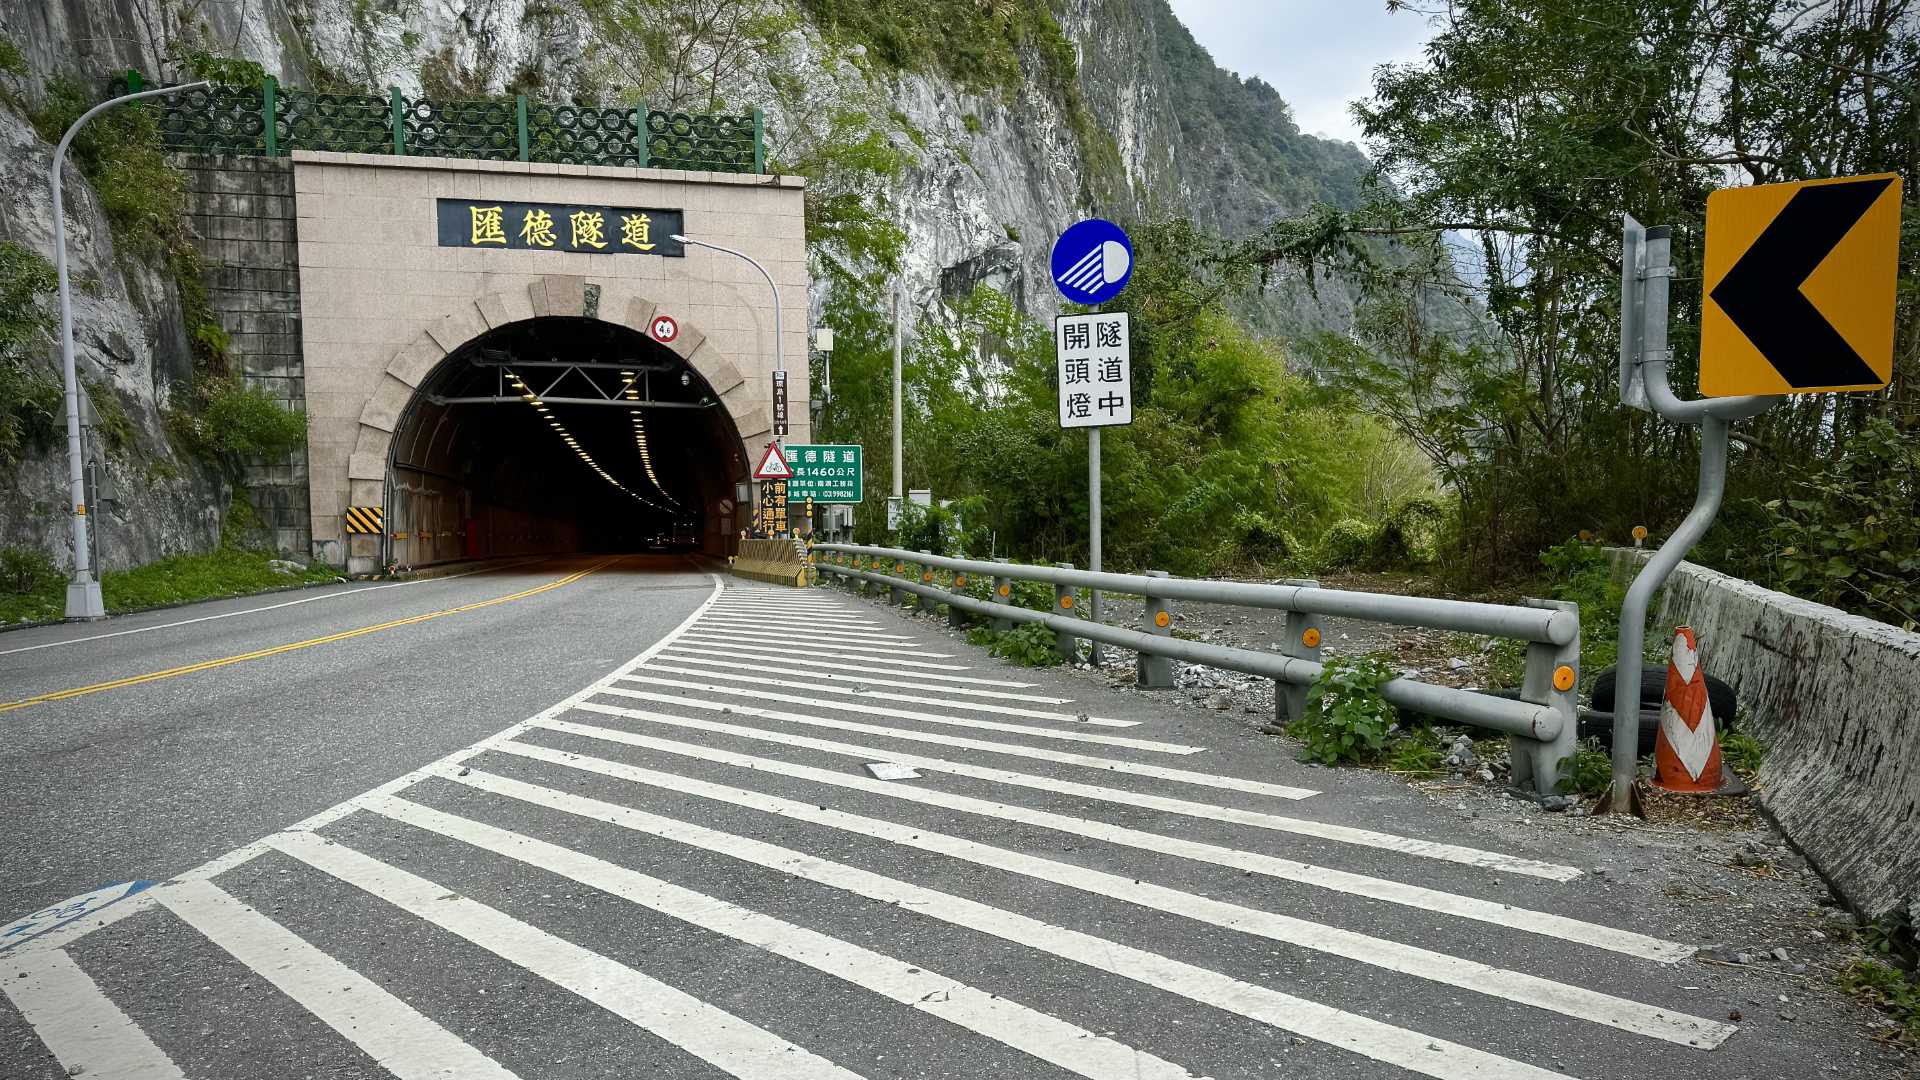 The entrance to a two-lane road tunnel through a mountain.